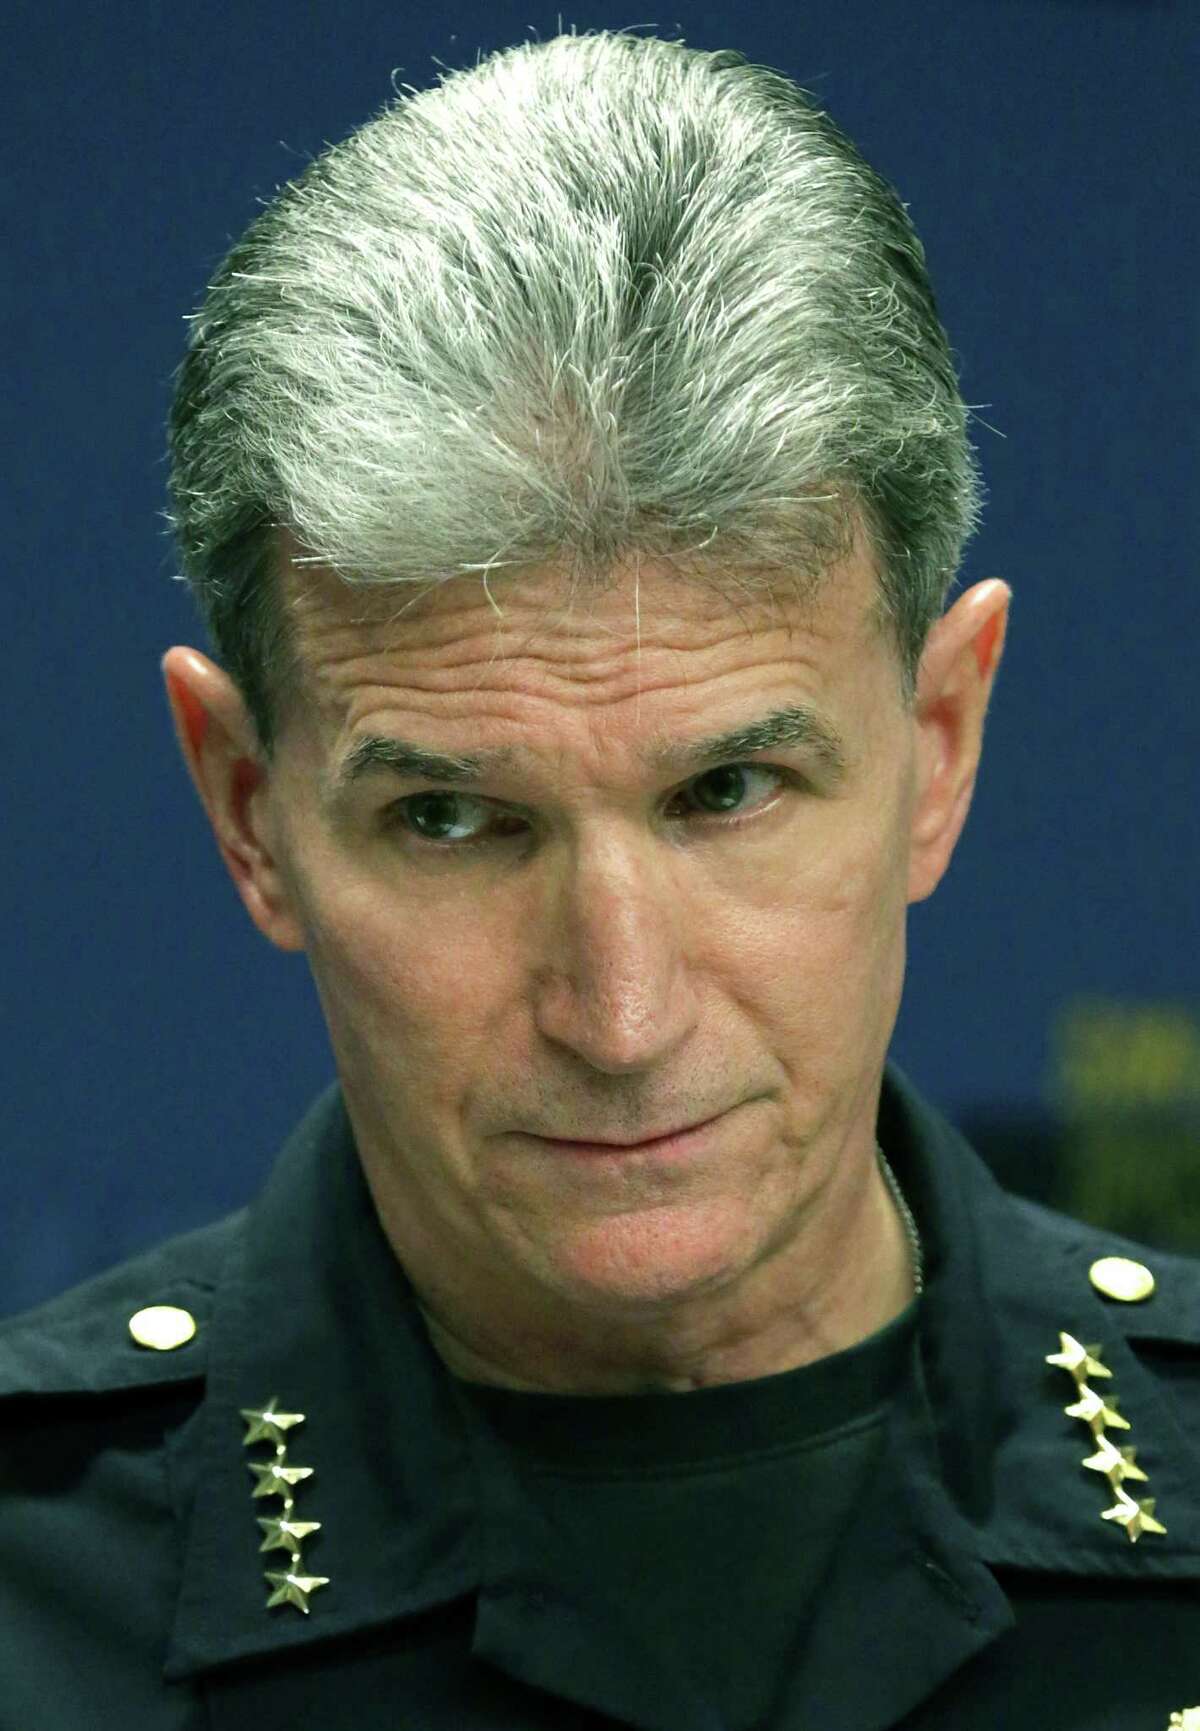 San Antonio Police Chief William McManus, pictured here, has twice suspended officer Gary S. Tuli.